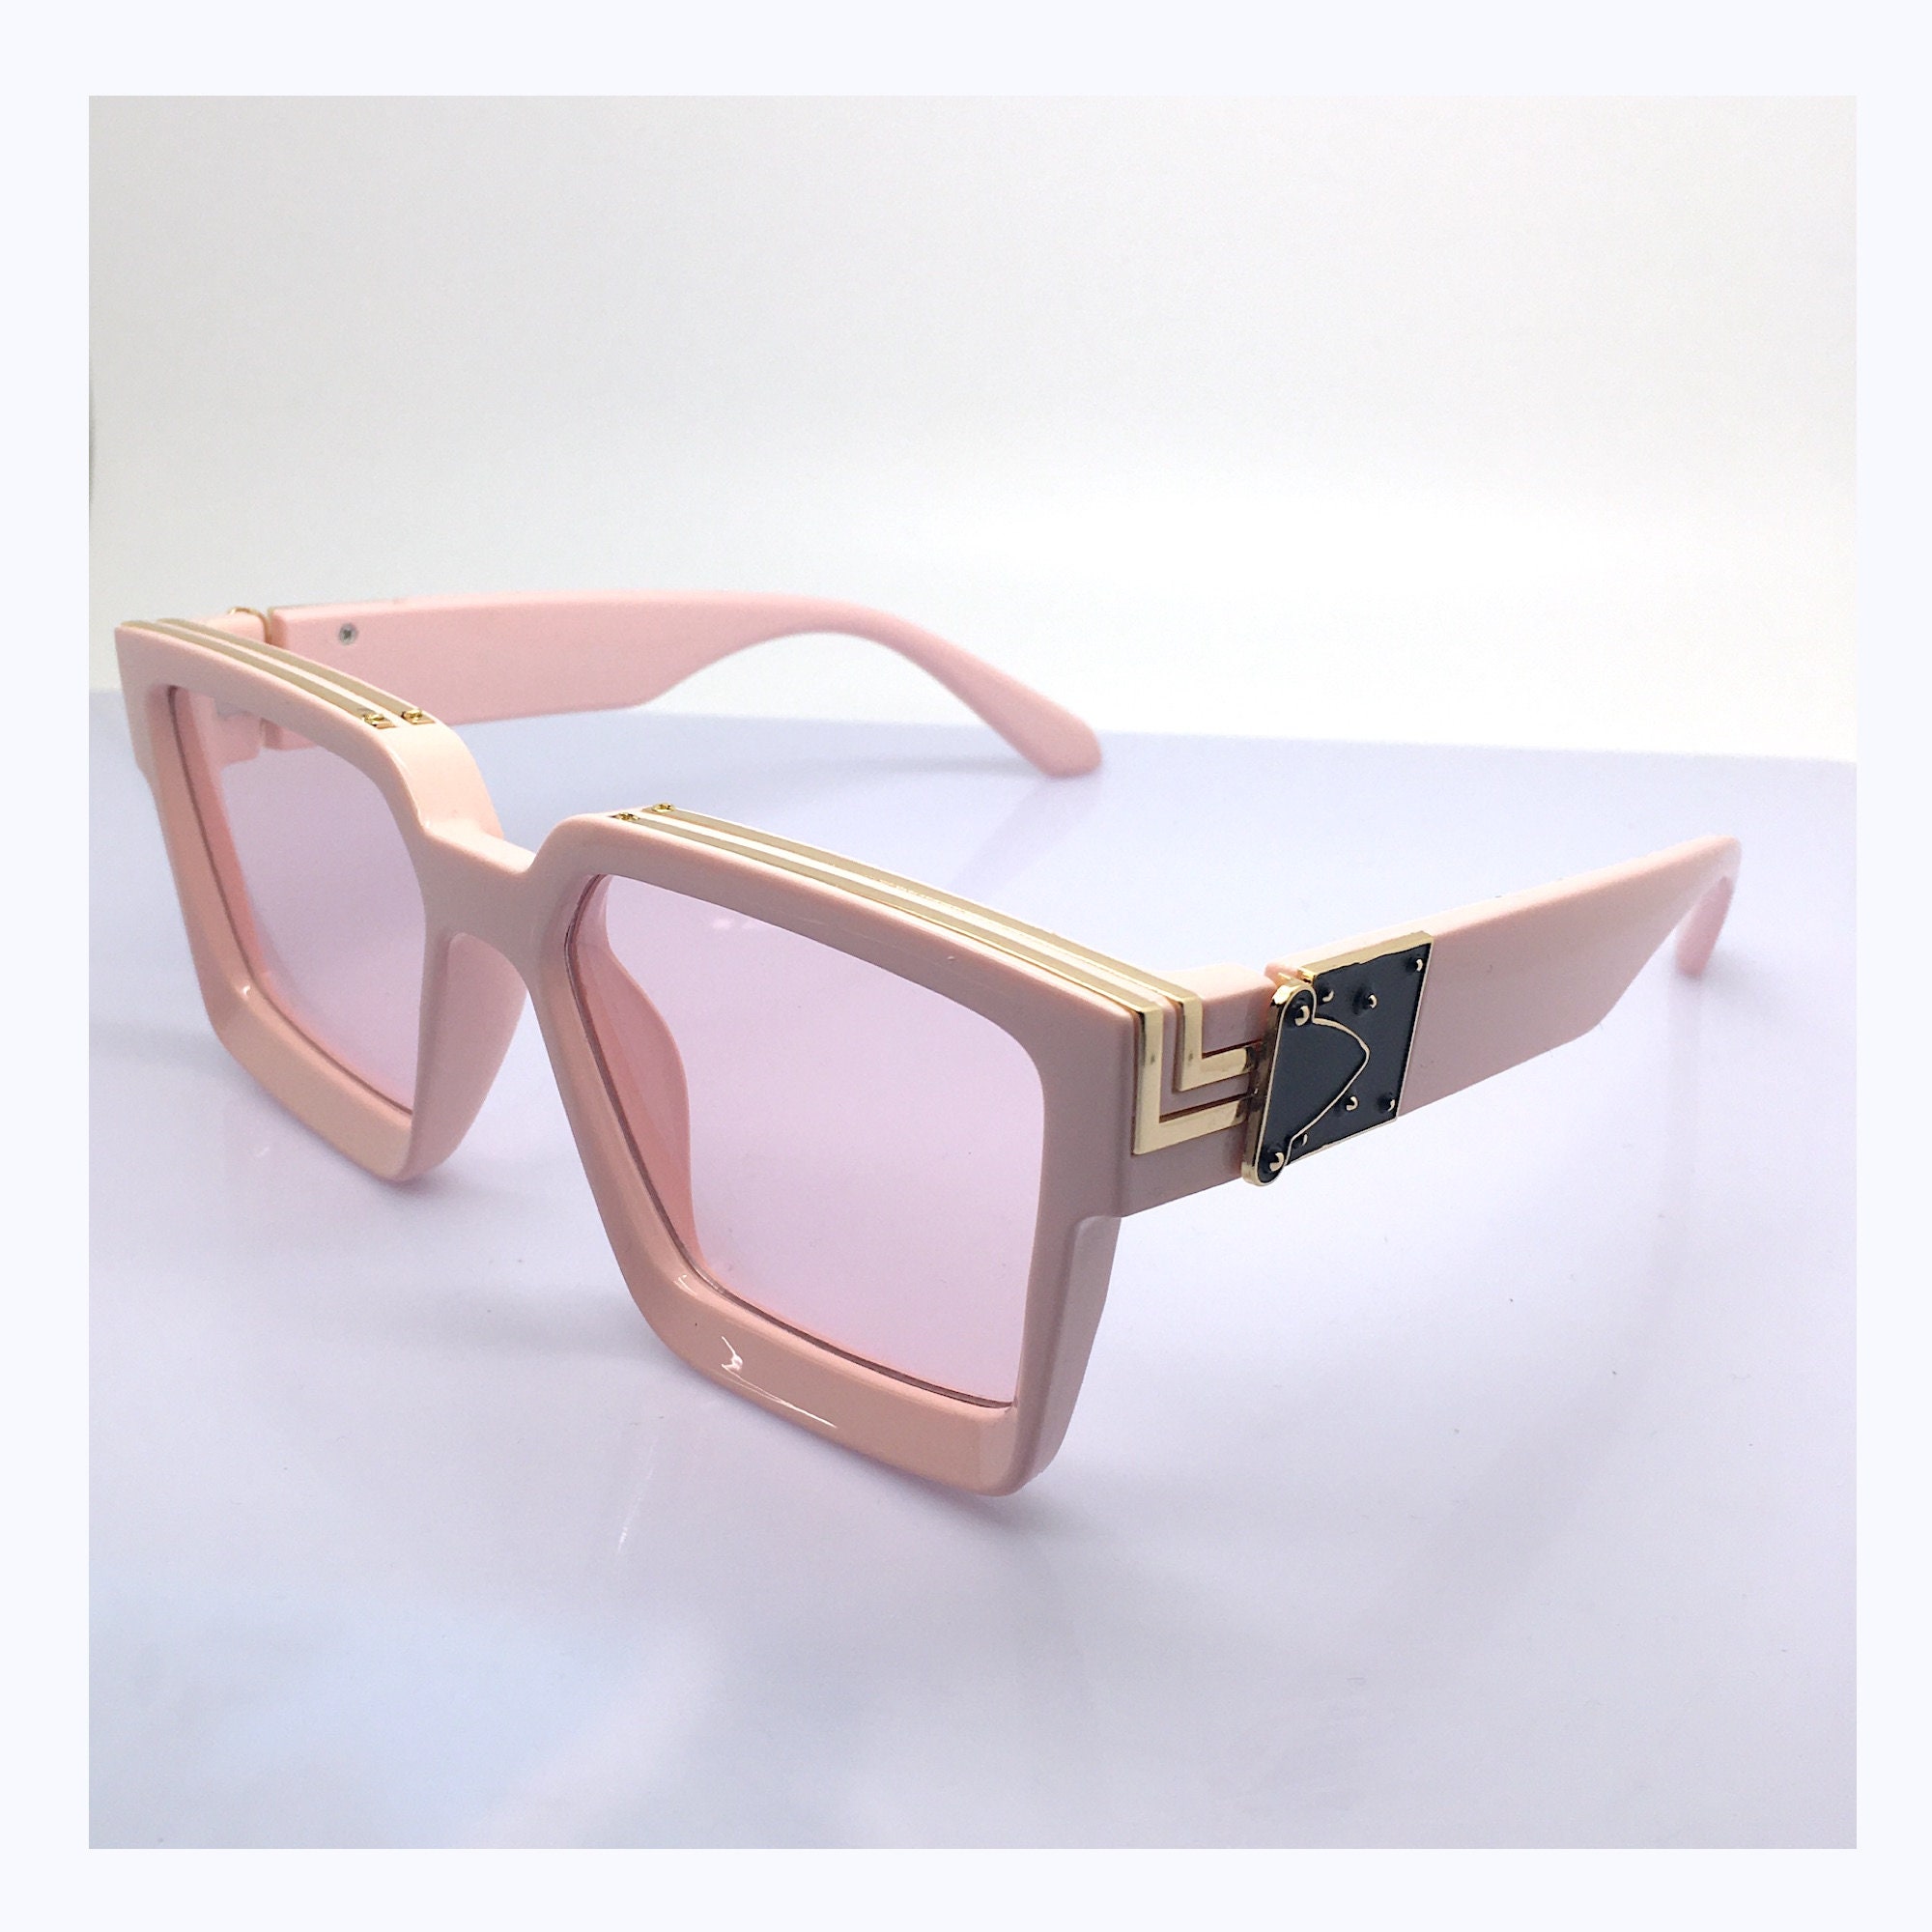 Oversize Sunglasses Man Woman Big Square Pastel Pink Frame Light Pink Lens Tattoo Rap Hip Hop Style, Fashionable Thick Frame, Glasses